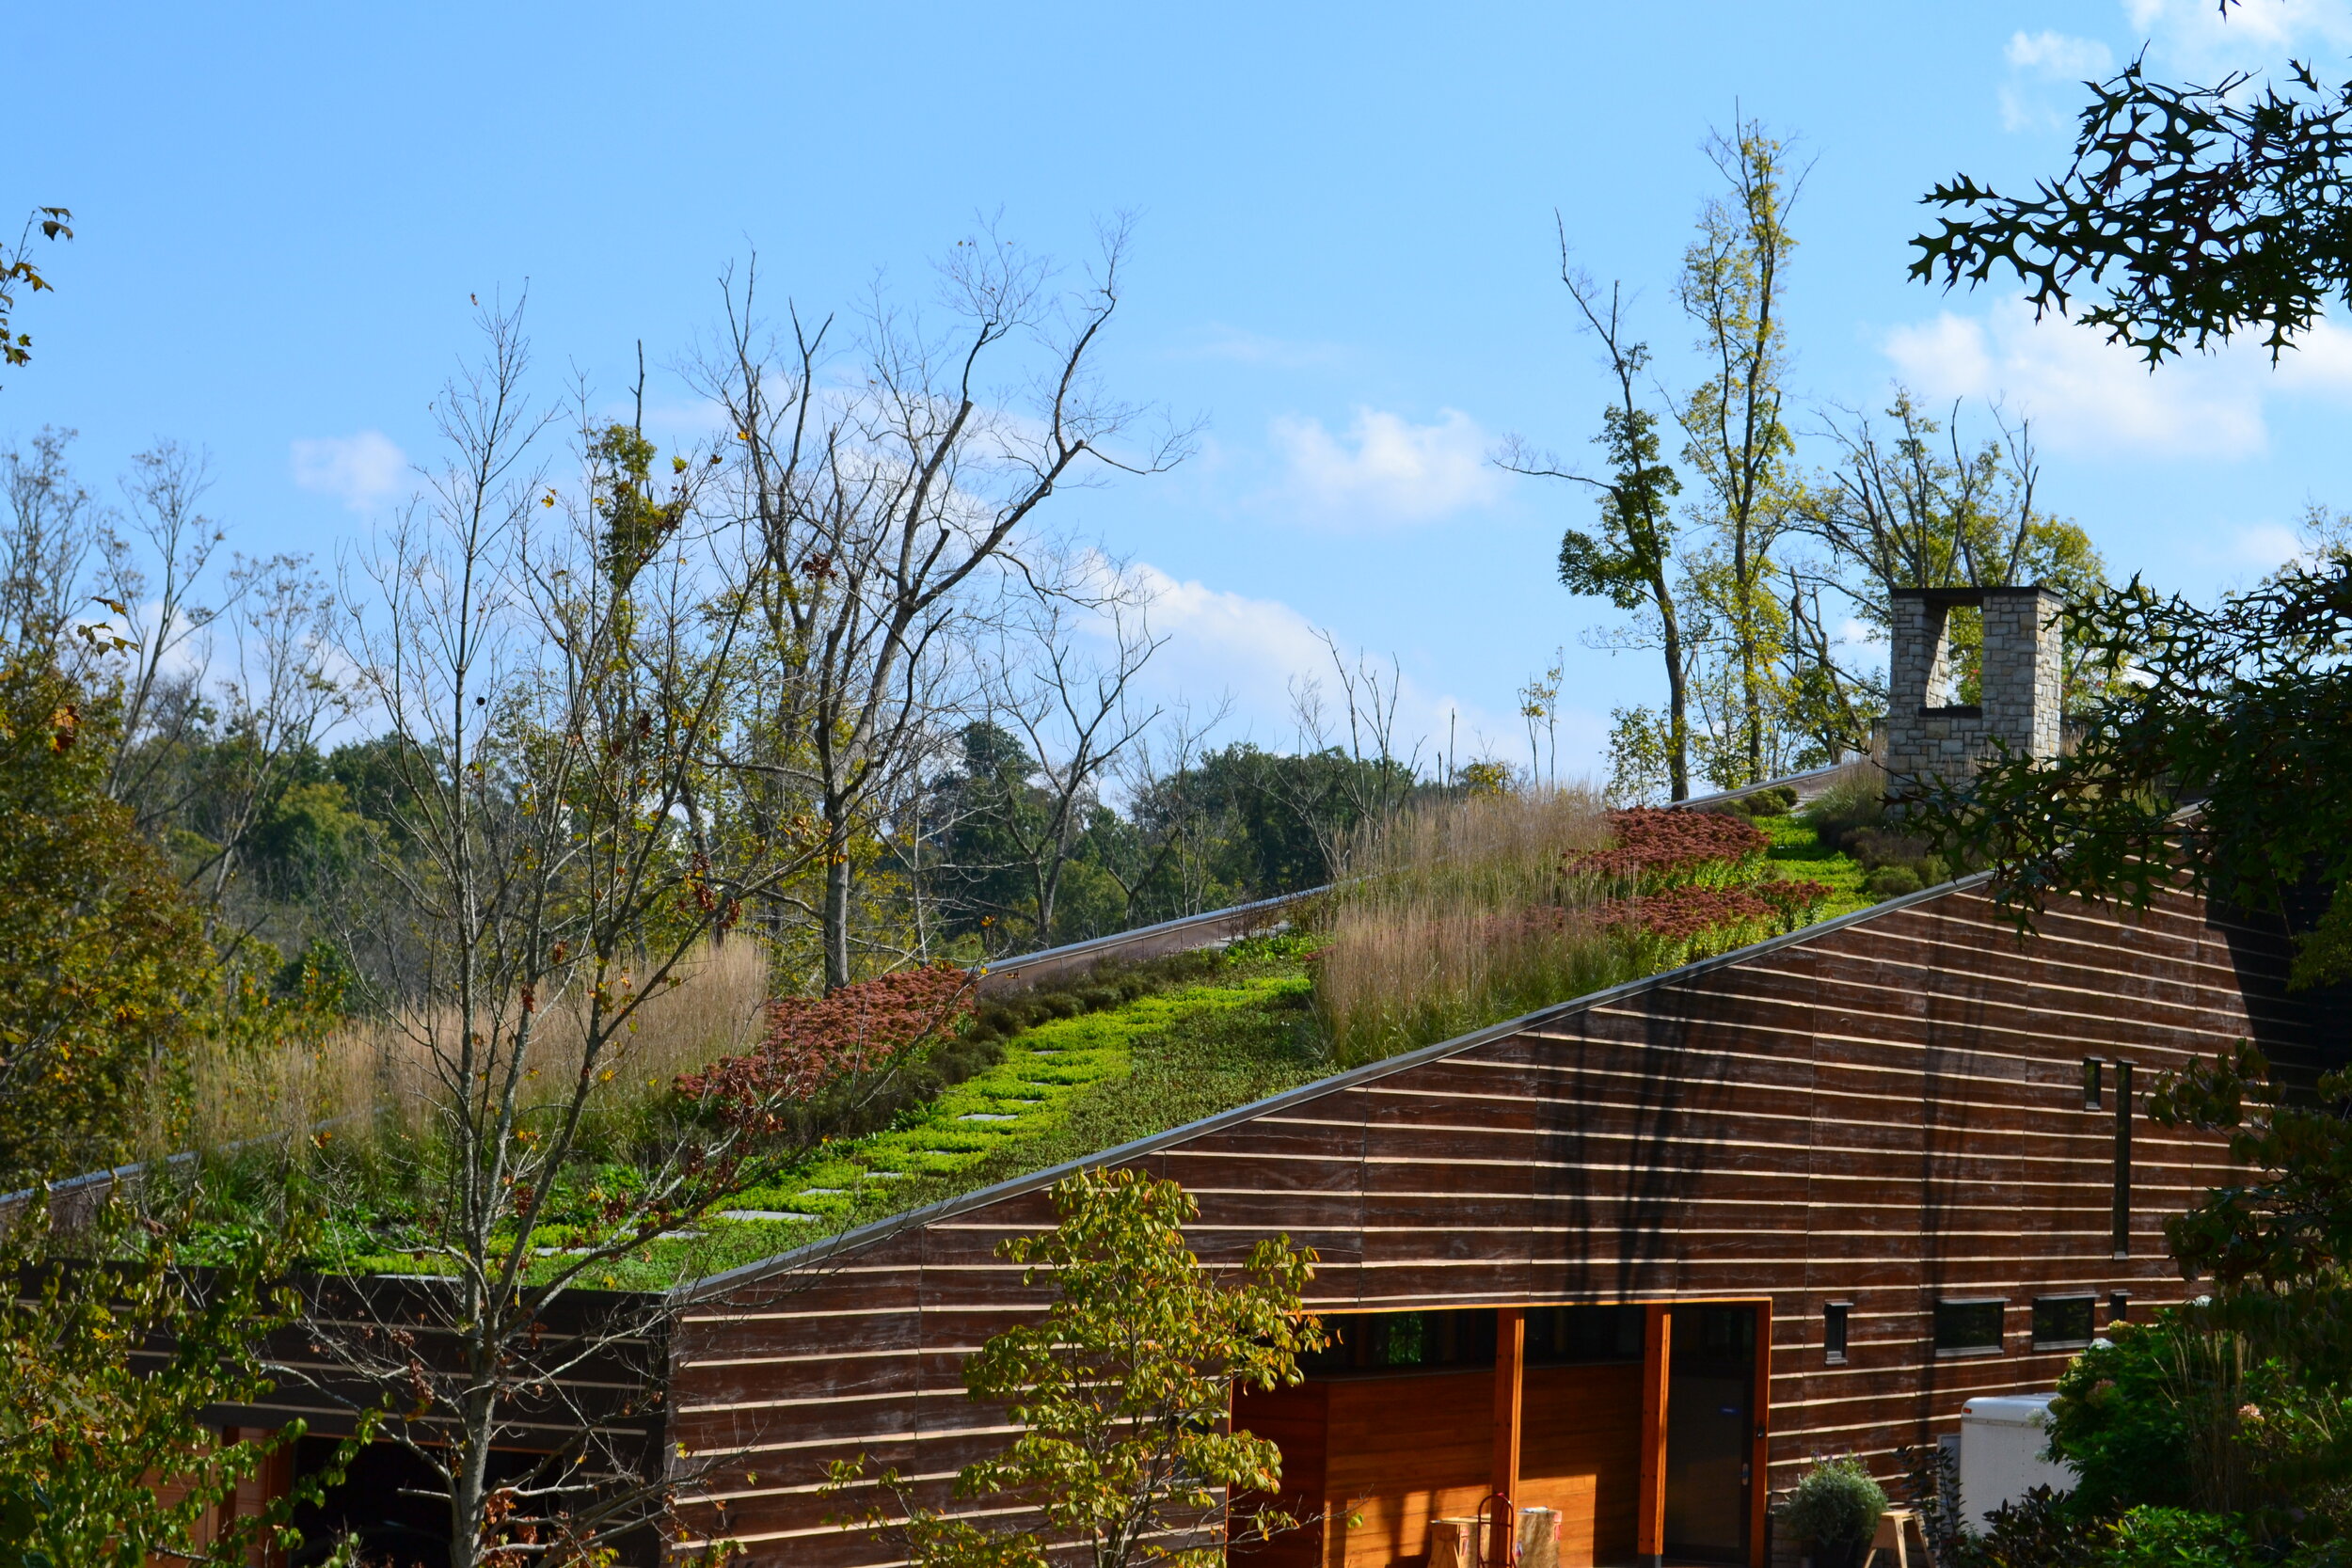 34-stride-studios-indian-hill-walnut-woods-green-roof.jpg